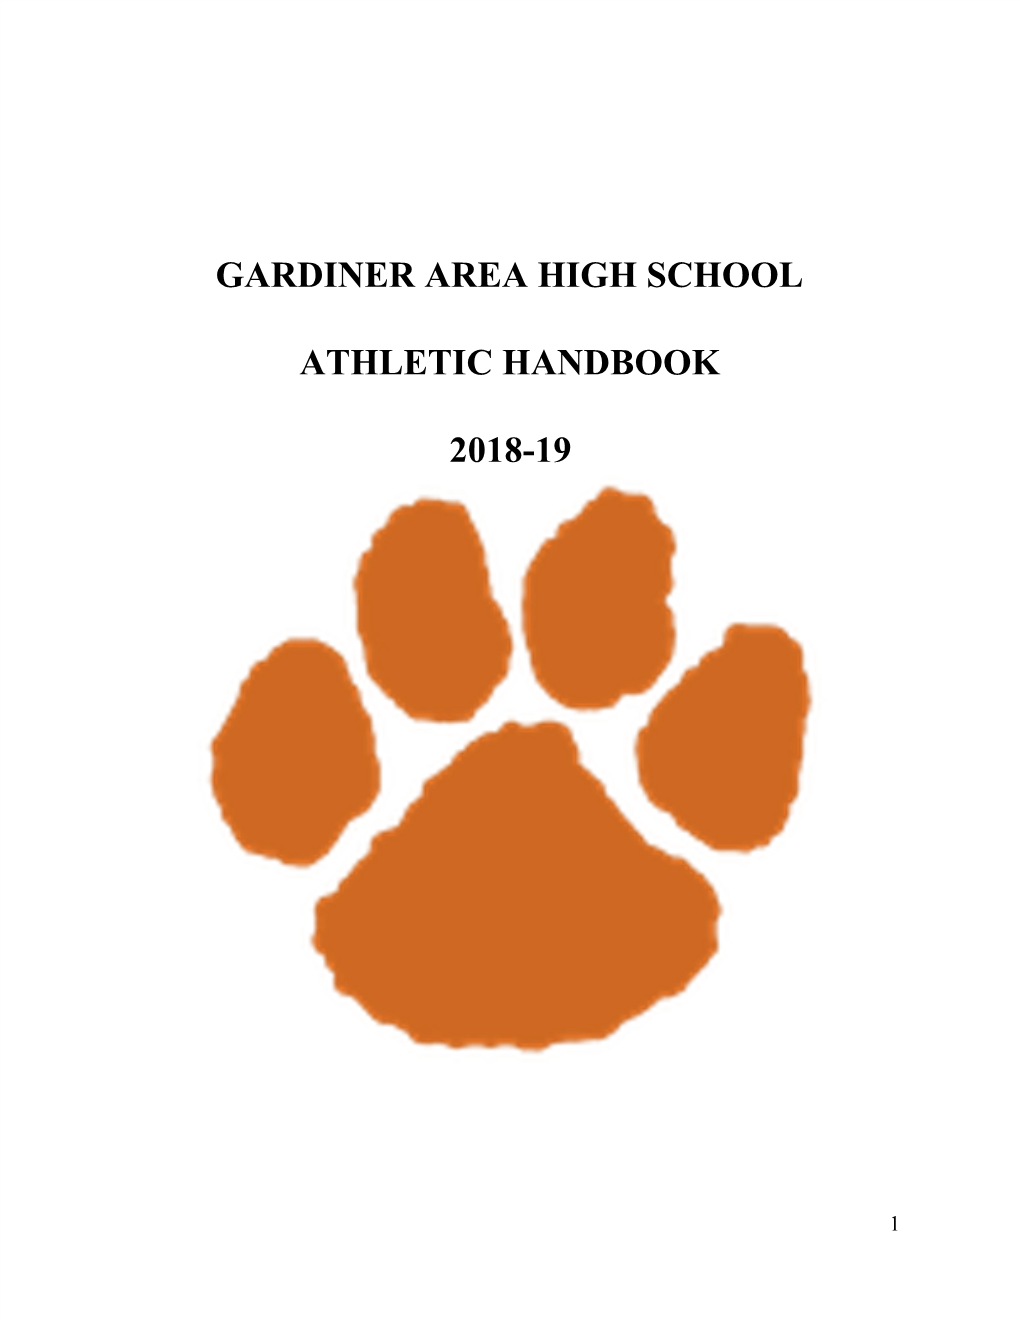 Gardiner Area High School Athletic Handbook 2018-19